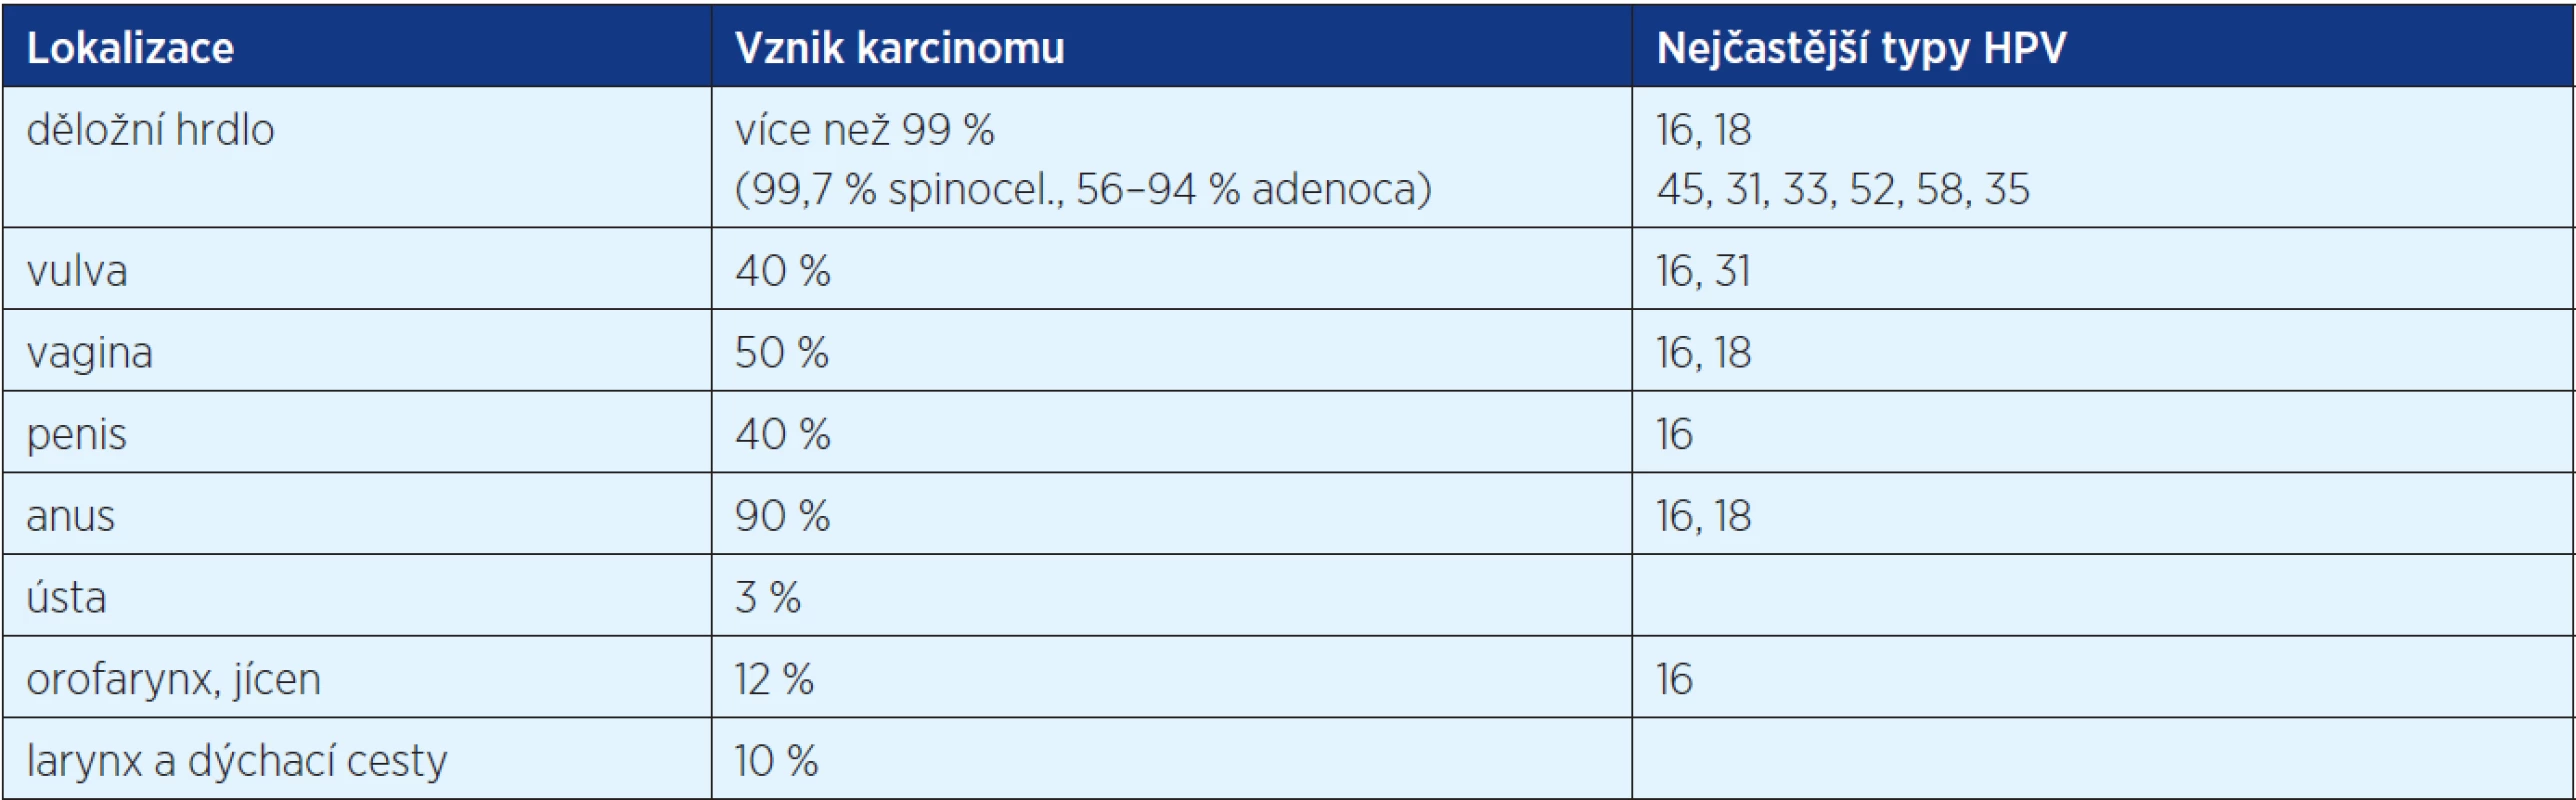 Asociace HR HPV s karcinomem (8, 12, 15)